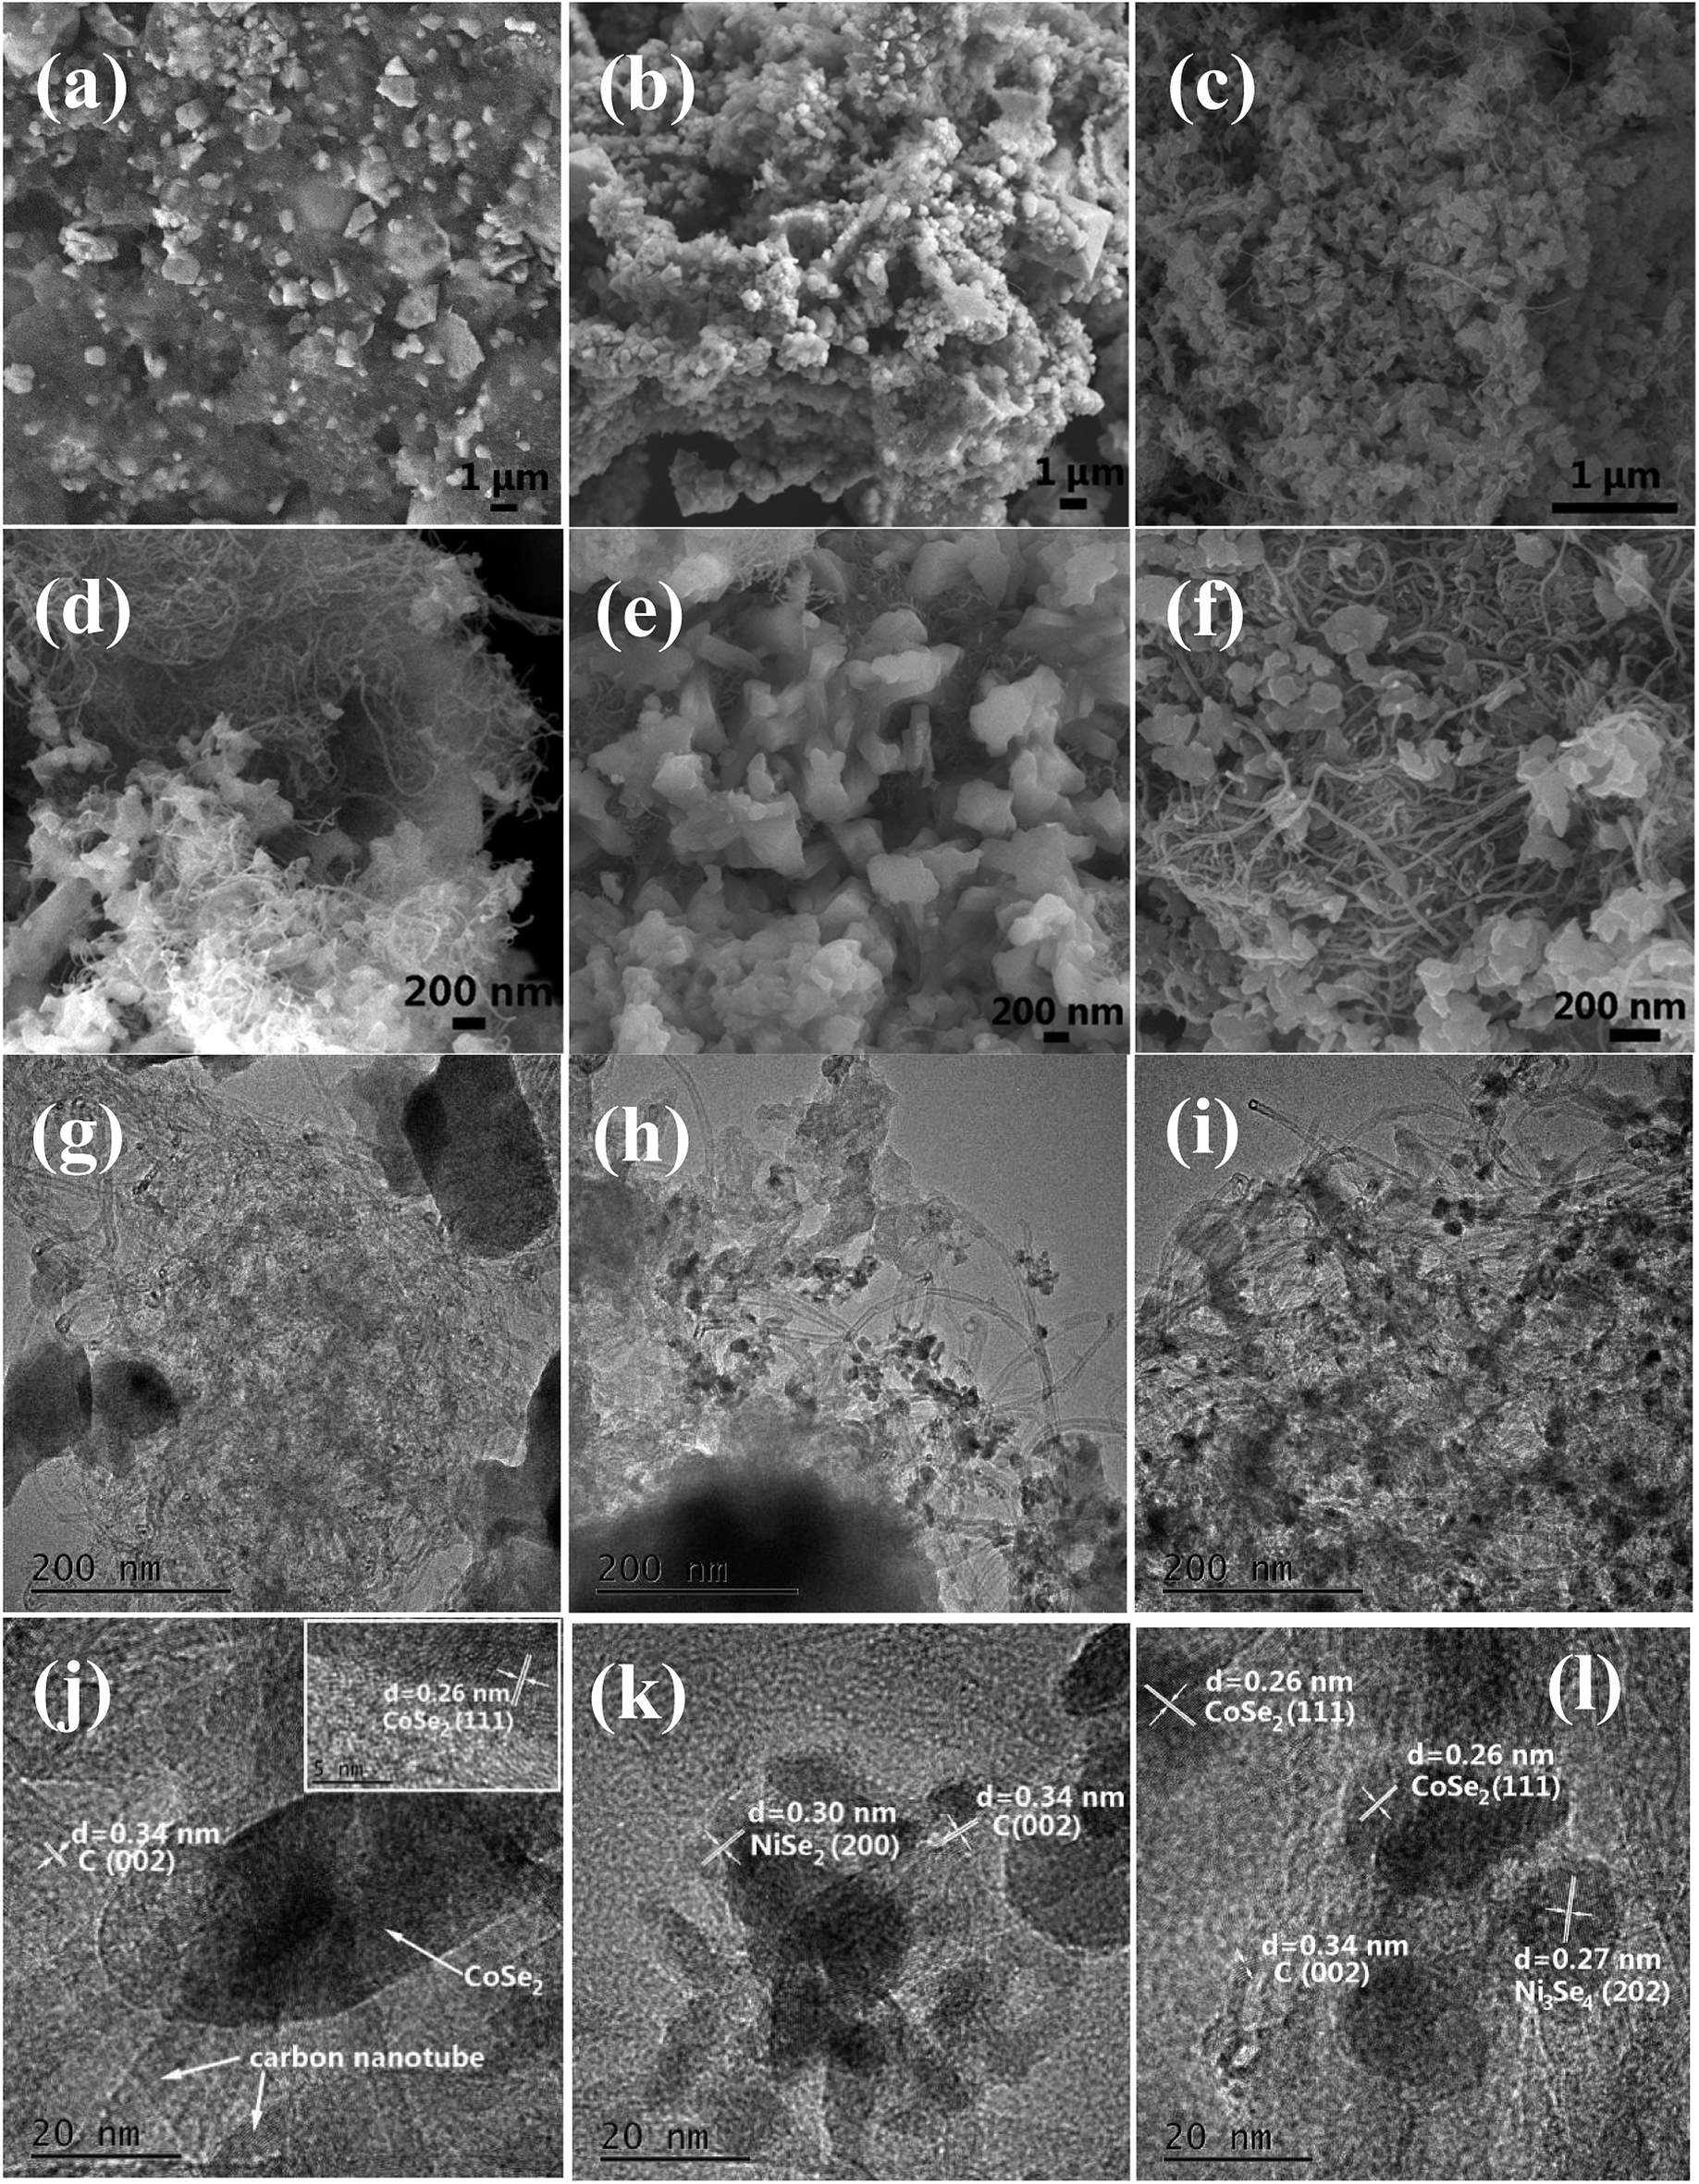 Facile Hydrothermal Synthesis Of Ternary Ni Co Se Carbon Nanotube Nanocomposites As Advanced Electrodes For Lithium Storage Rsc Advances Rsc Publishing Doi 10 1039 C8raa